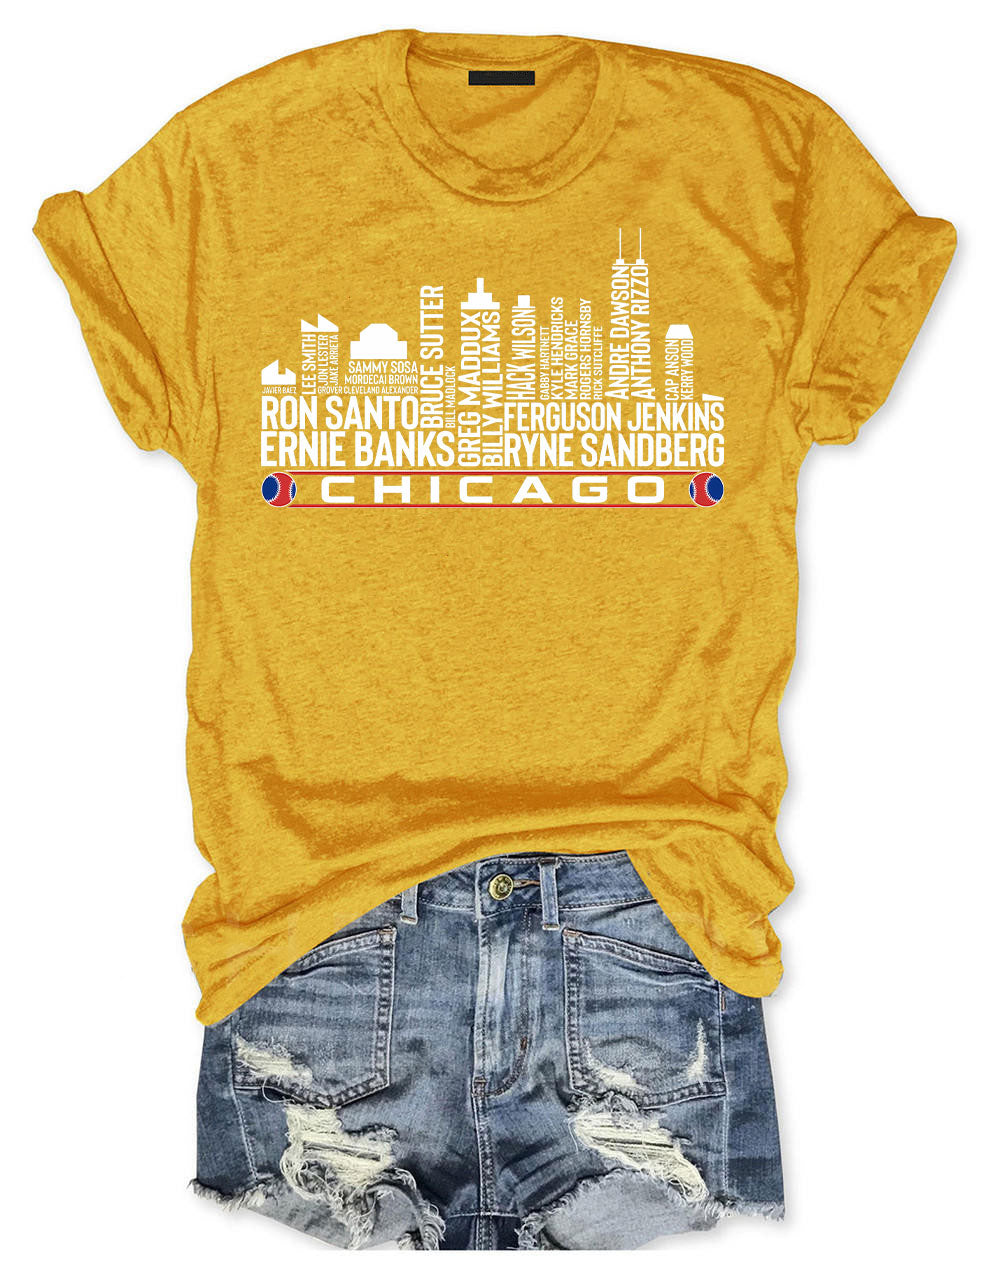 Chicago Baseball T-shirt